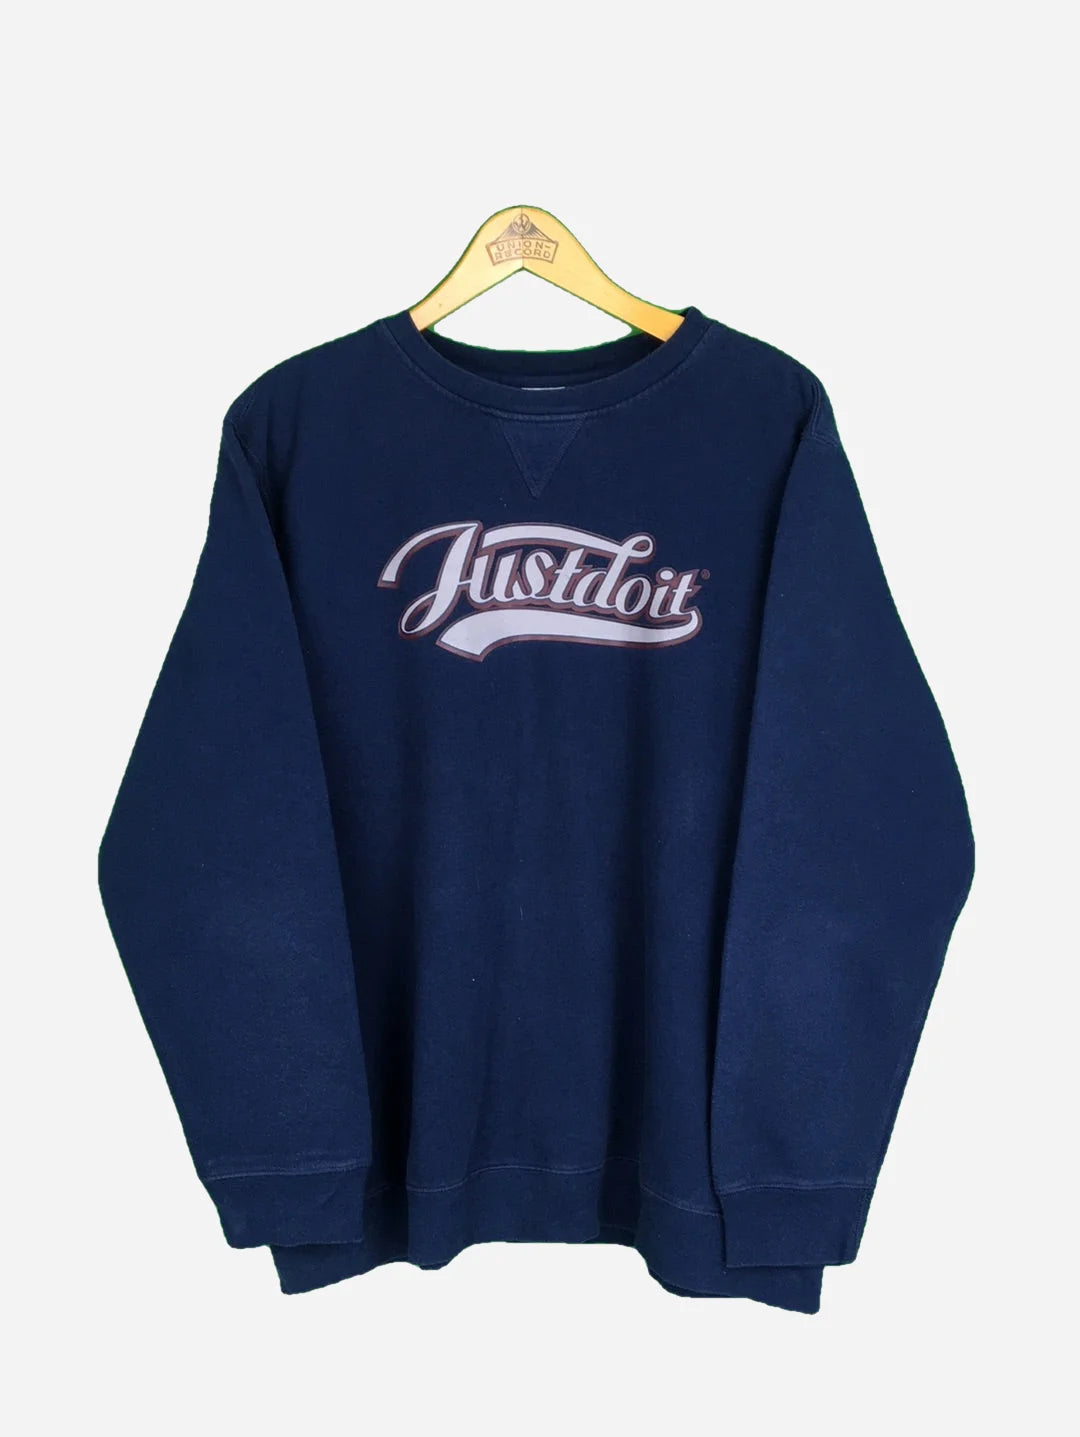 Nike “Just Do It” Sweater (L)